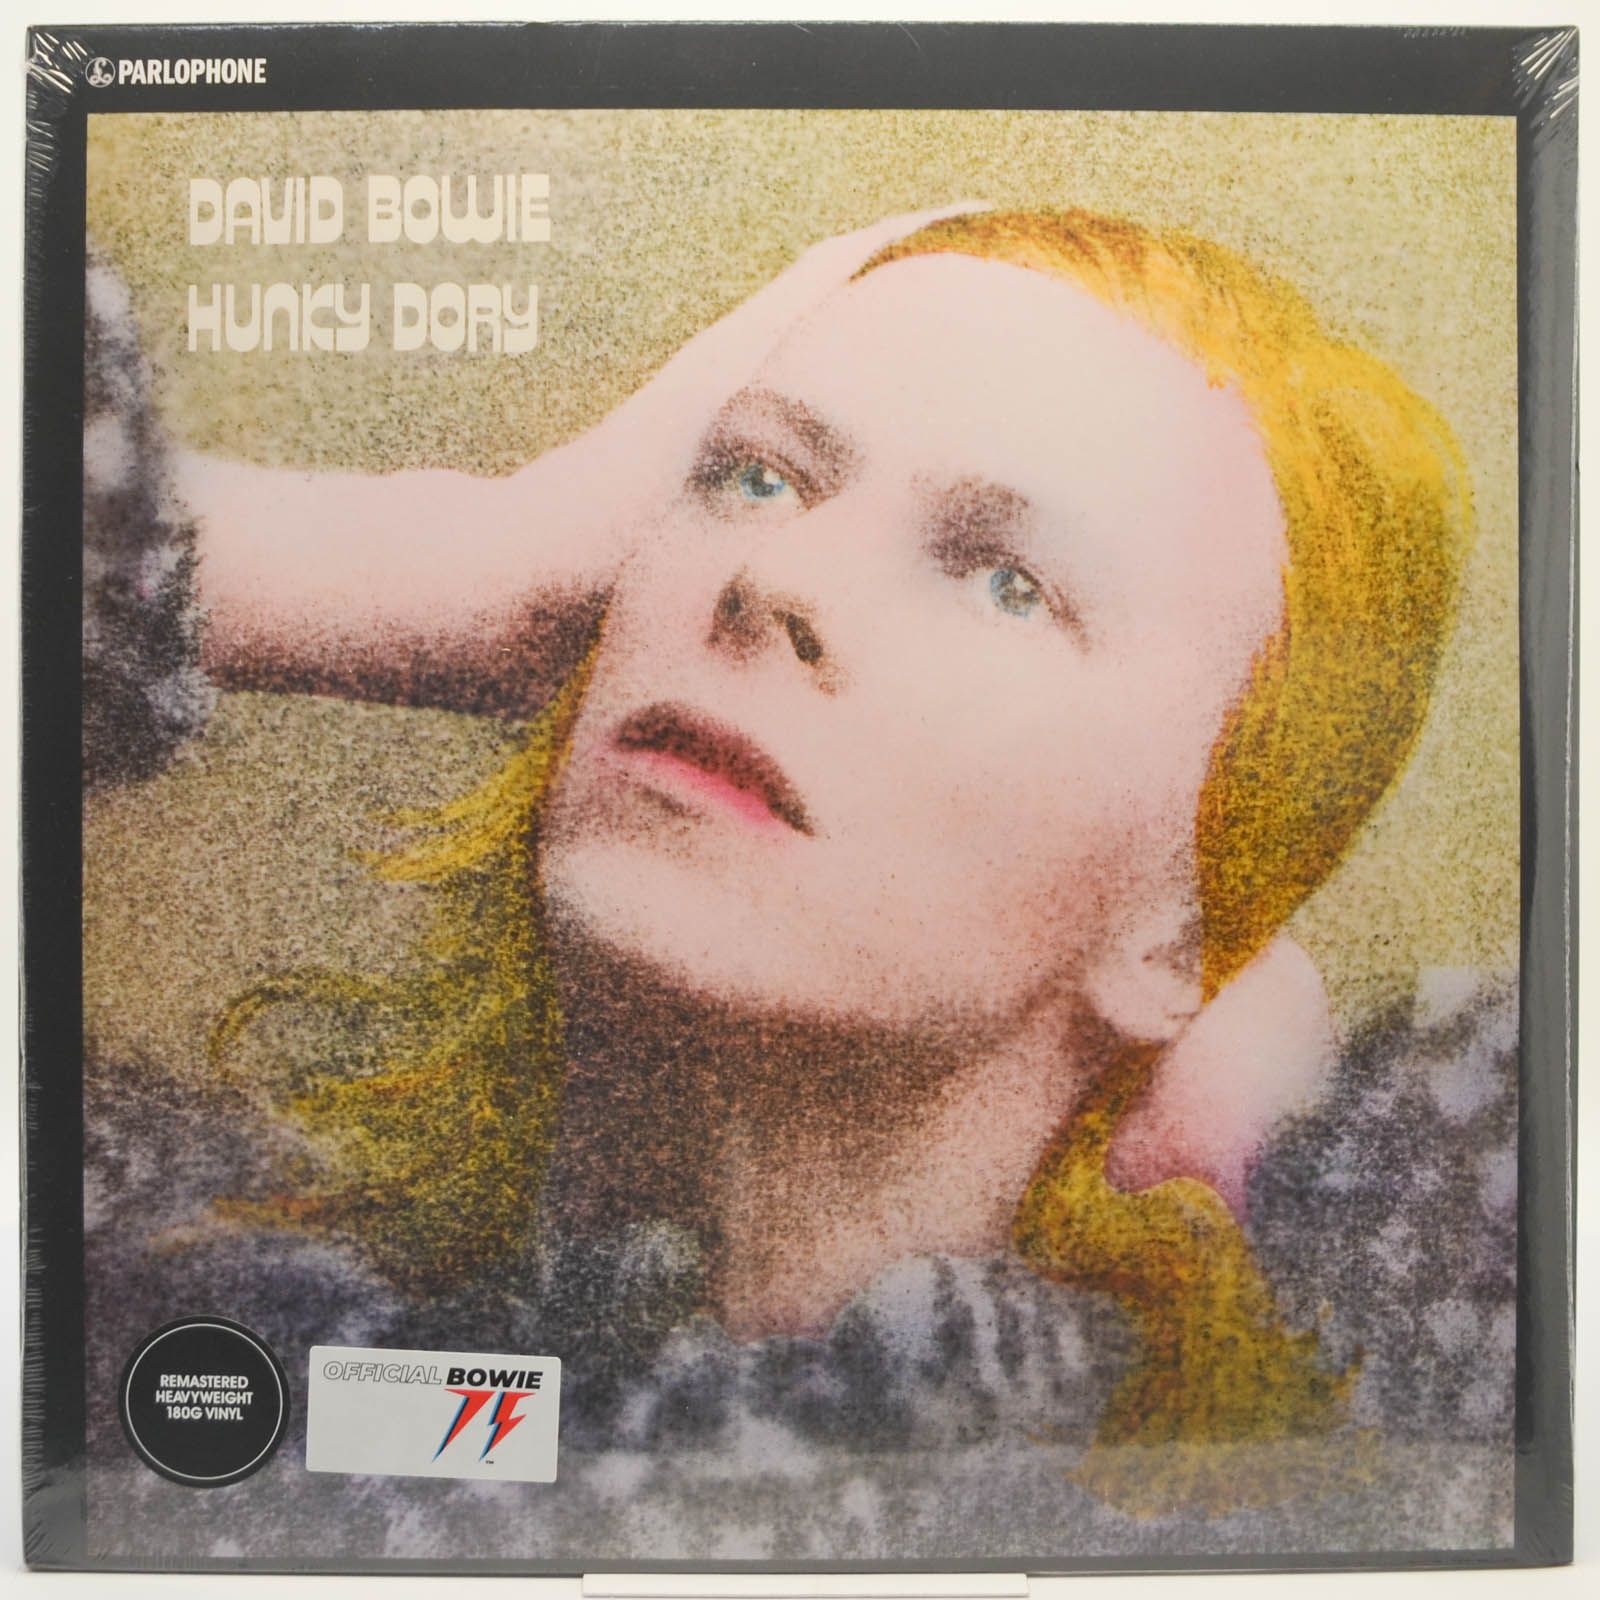 David Bowie — Hunky Dory, 1971